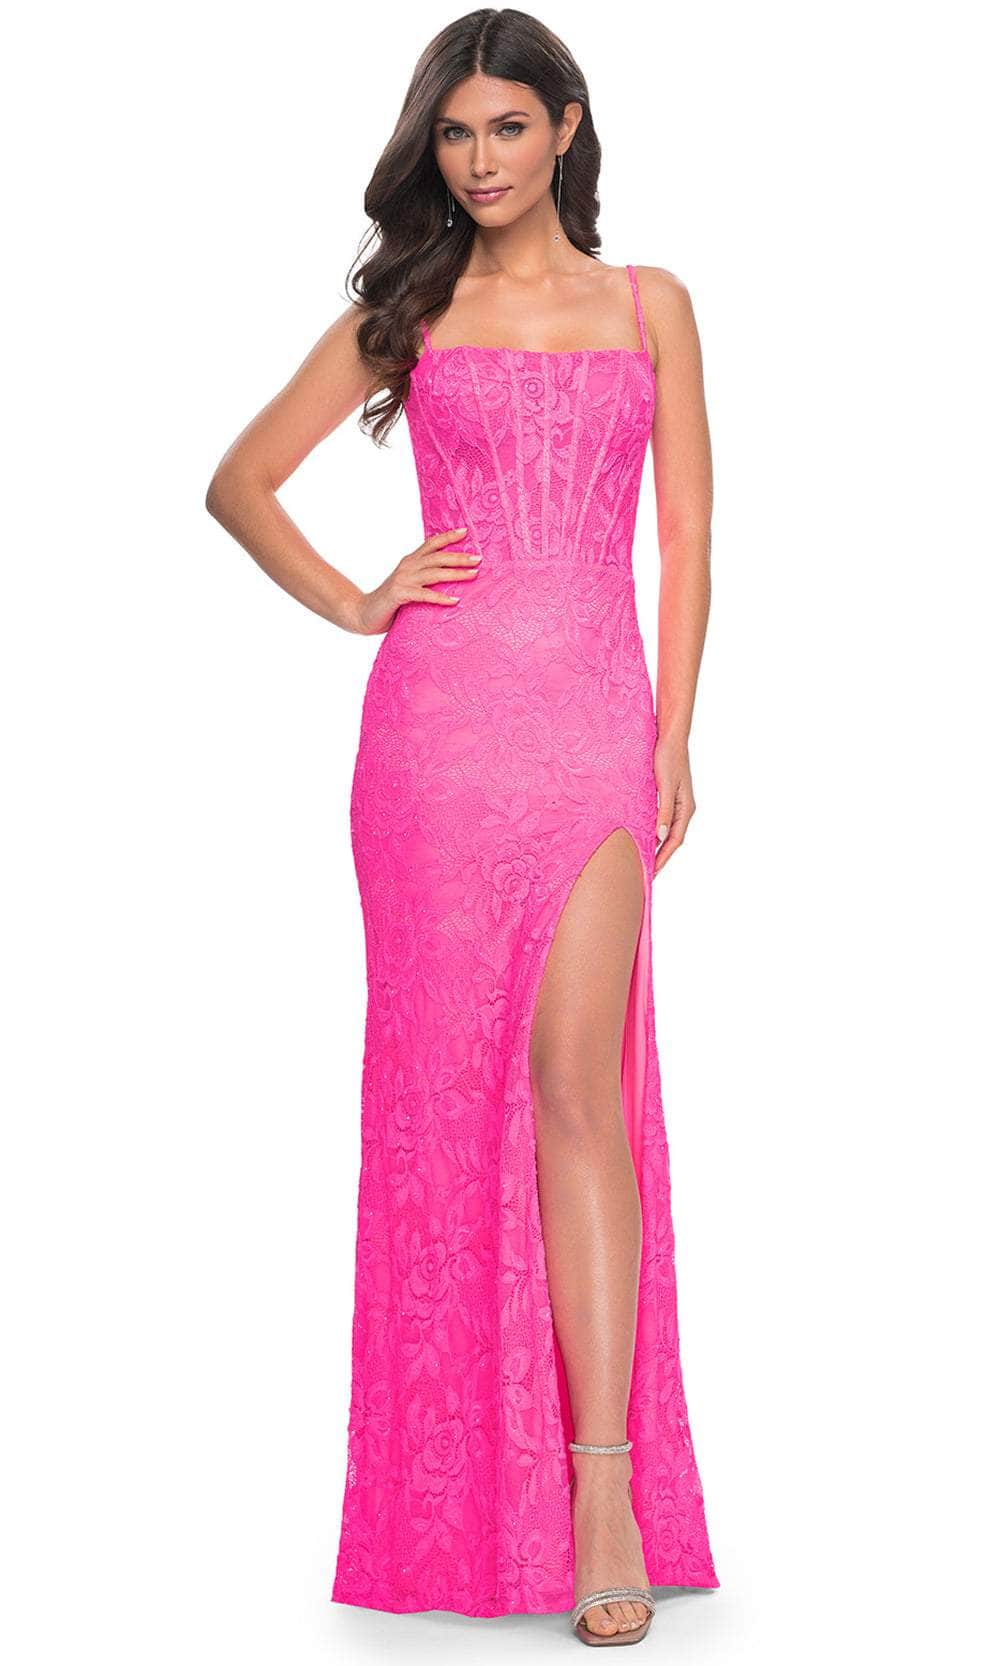 Image of La Femme 32423 - Lace Spaghetti Strap Prom Dress